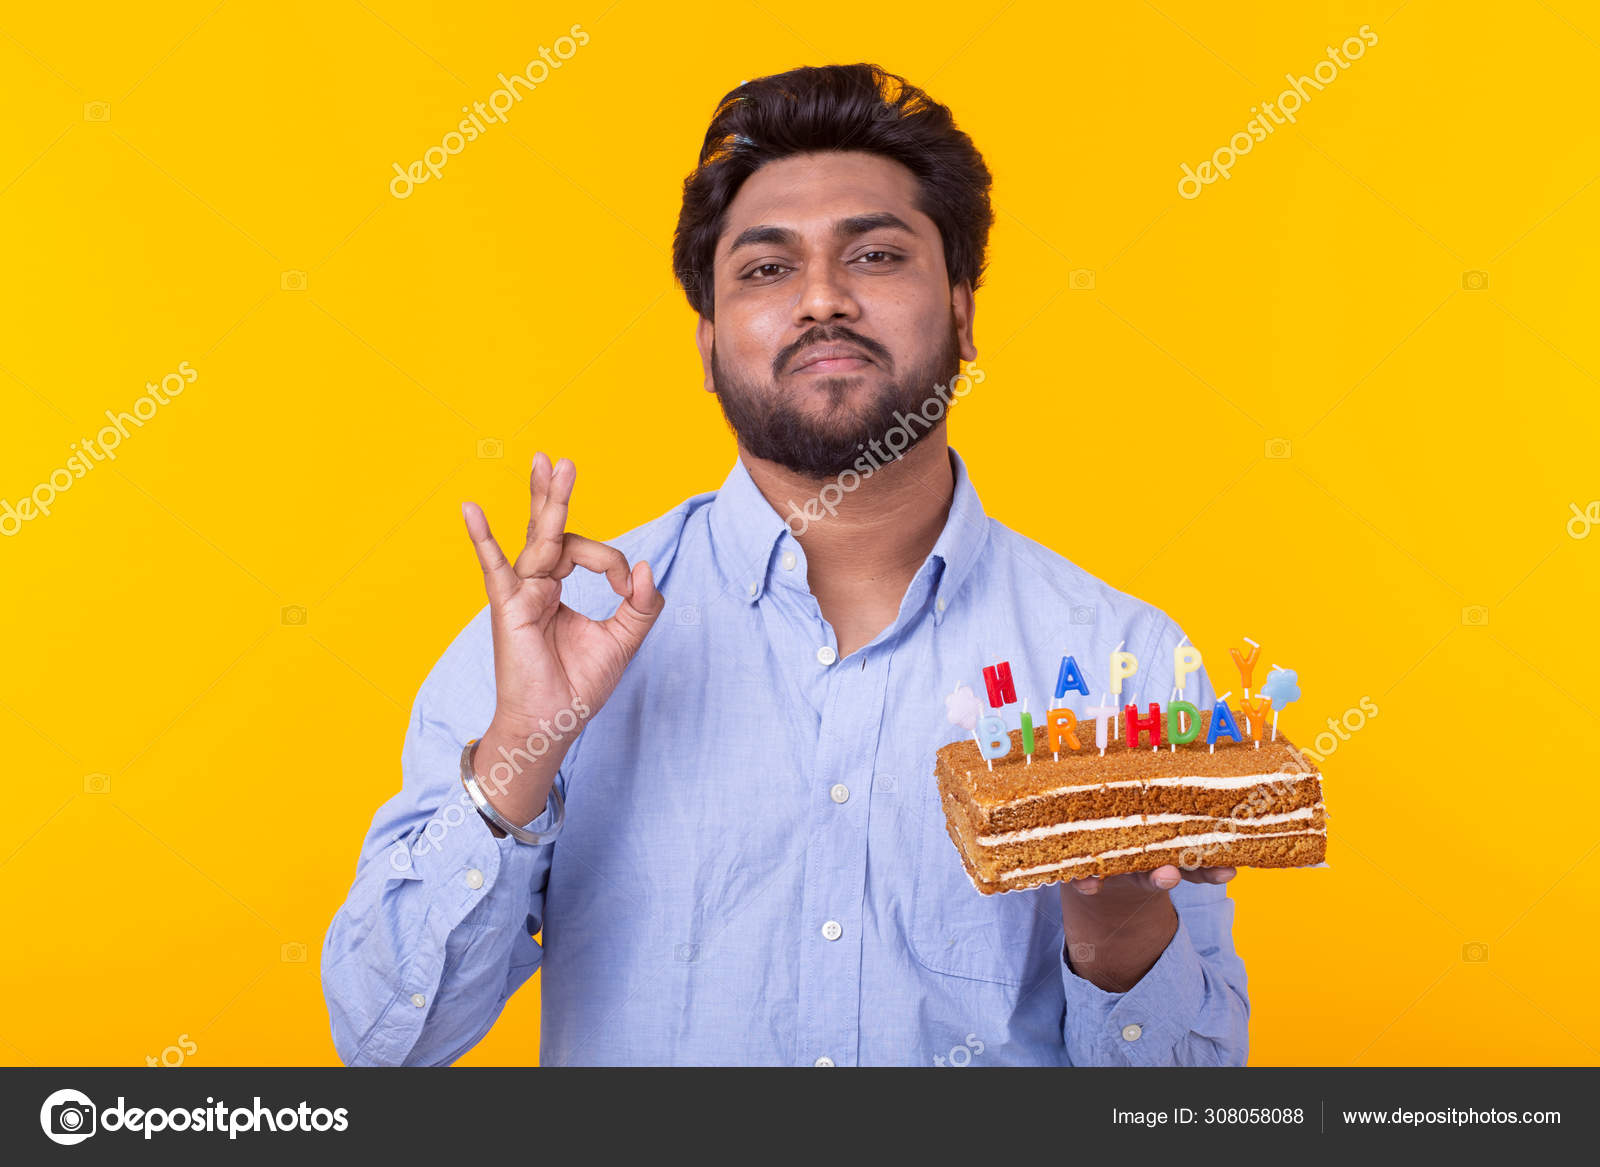 Birthday Girls Posing Cake On Birthday Stock Photo 476568859 | Shutterstock